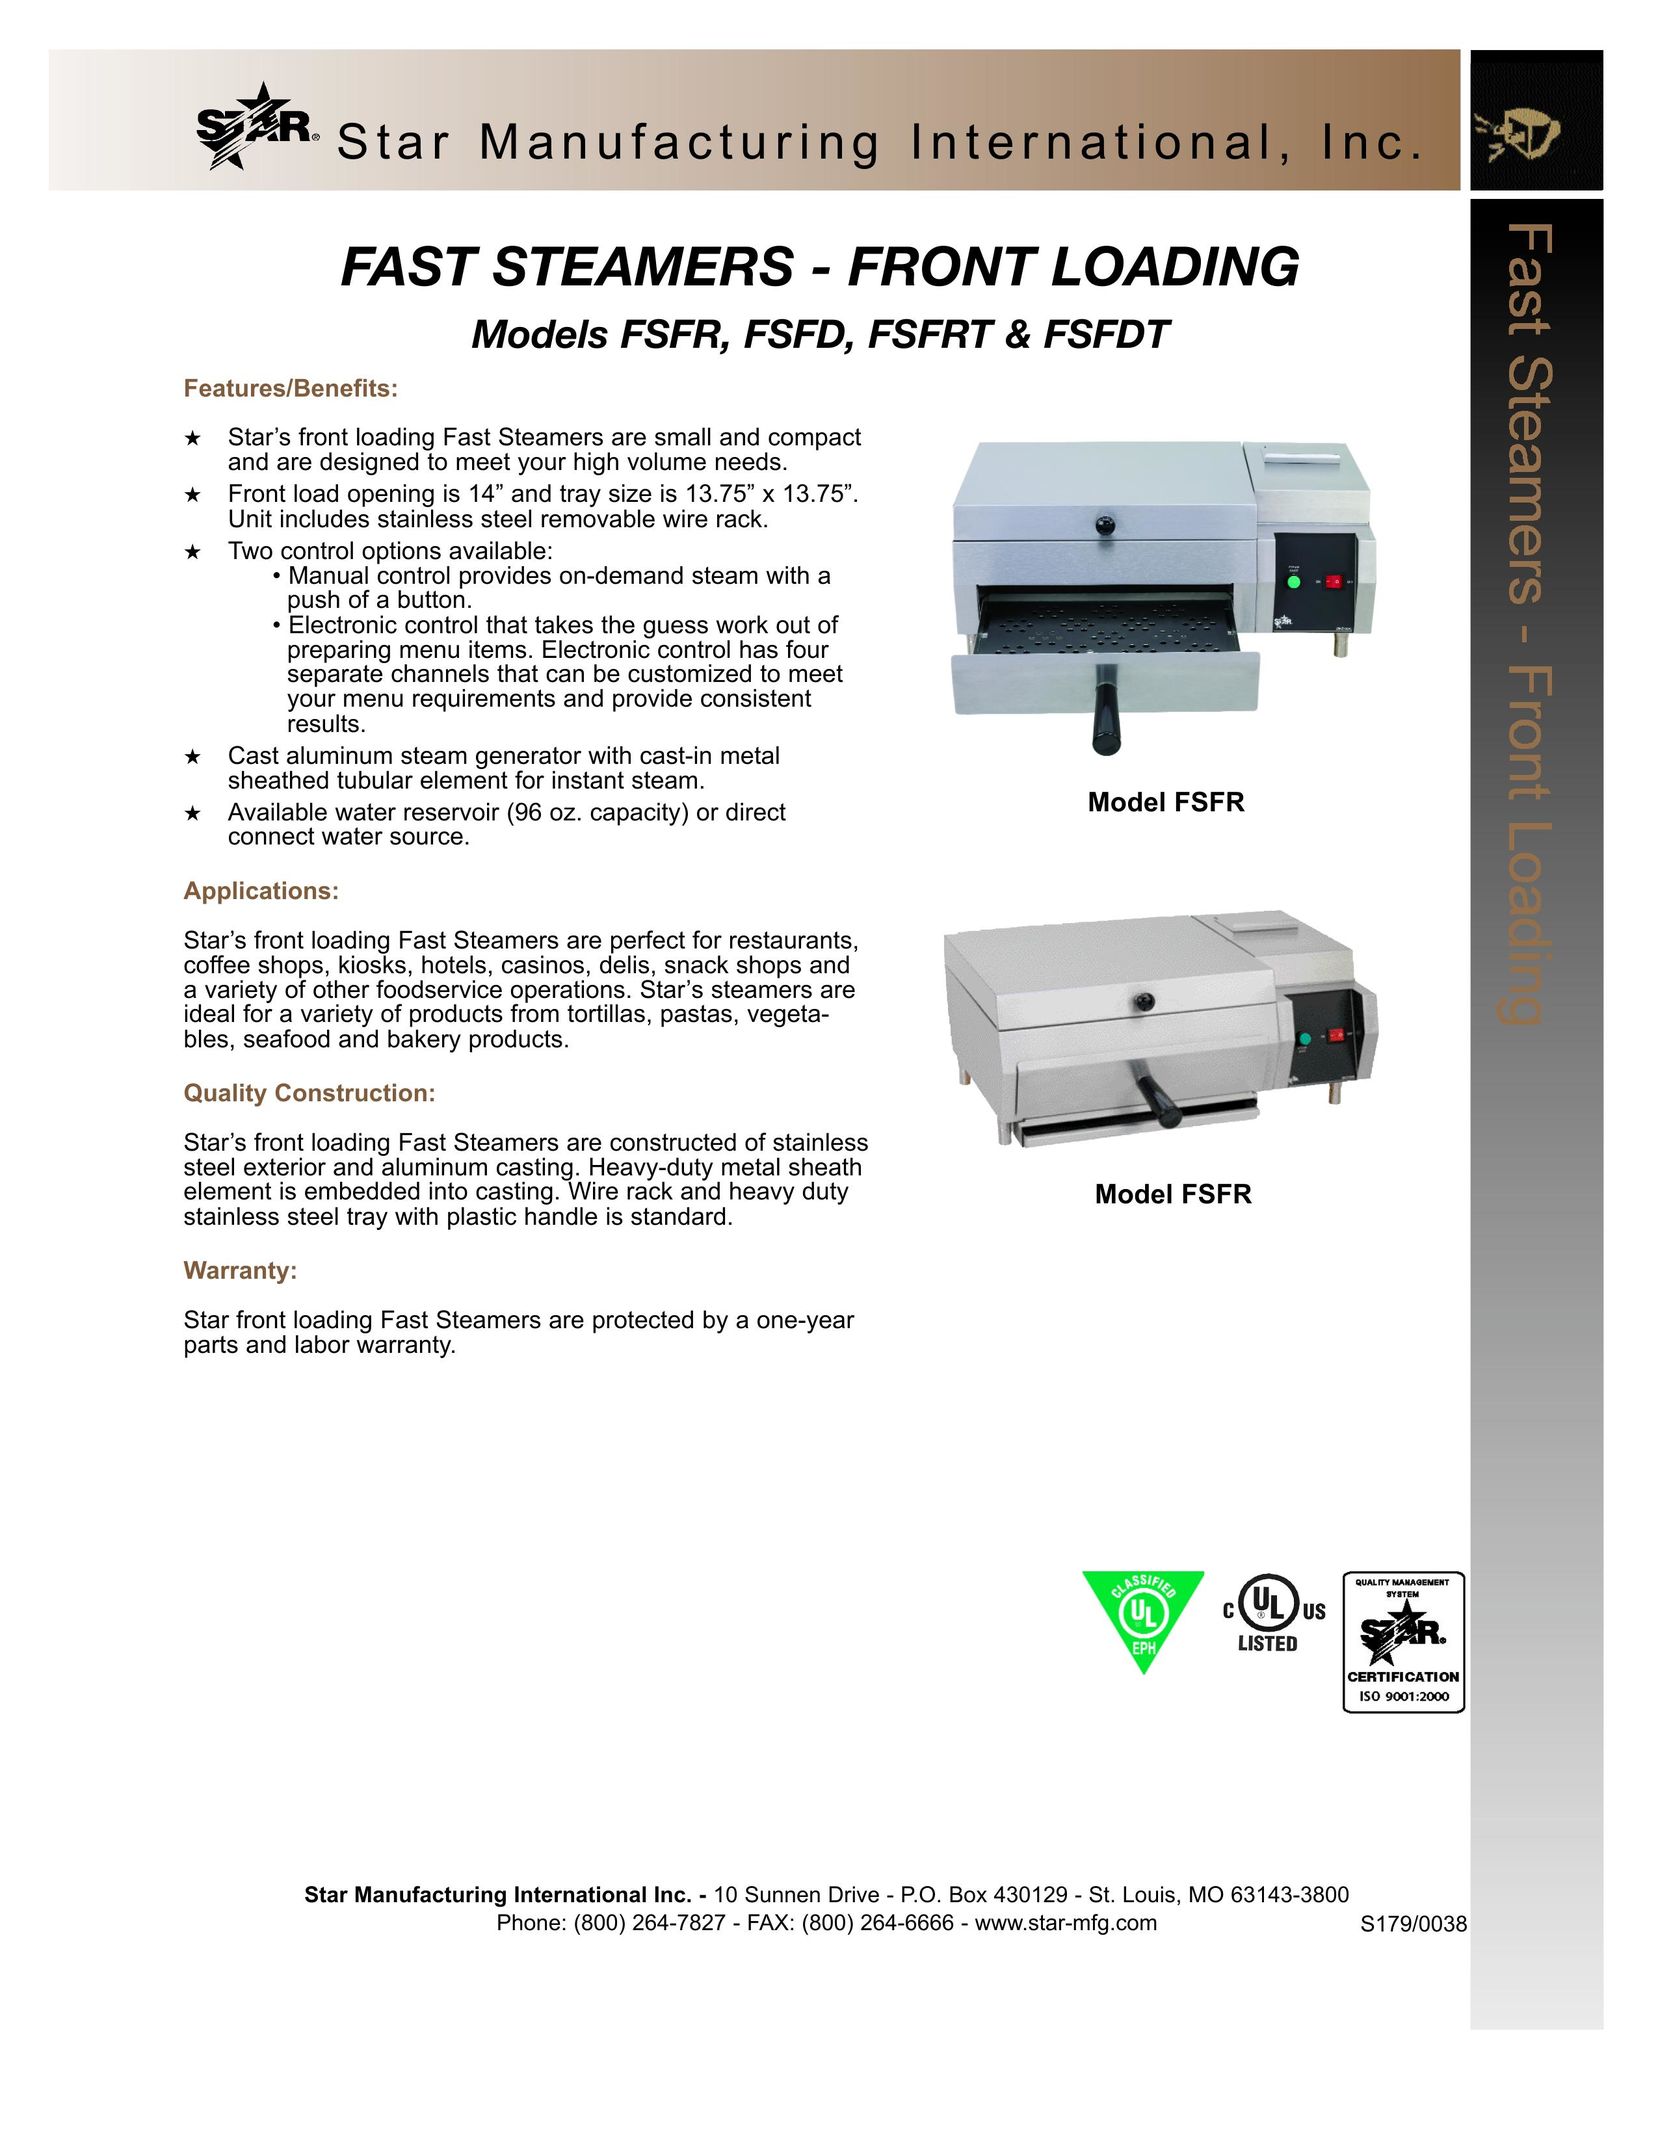 Star Manufacturing FSFR Electric Steamer User Manual